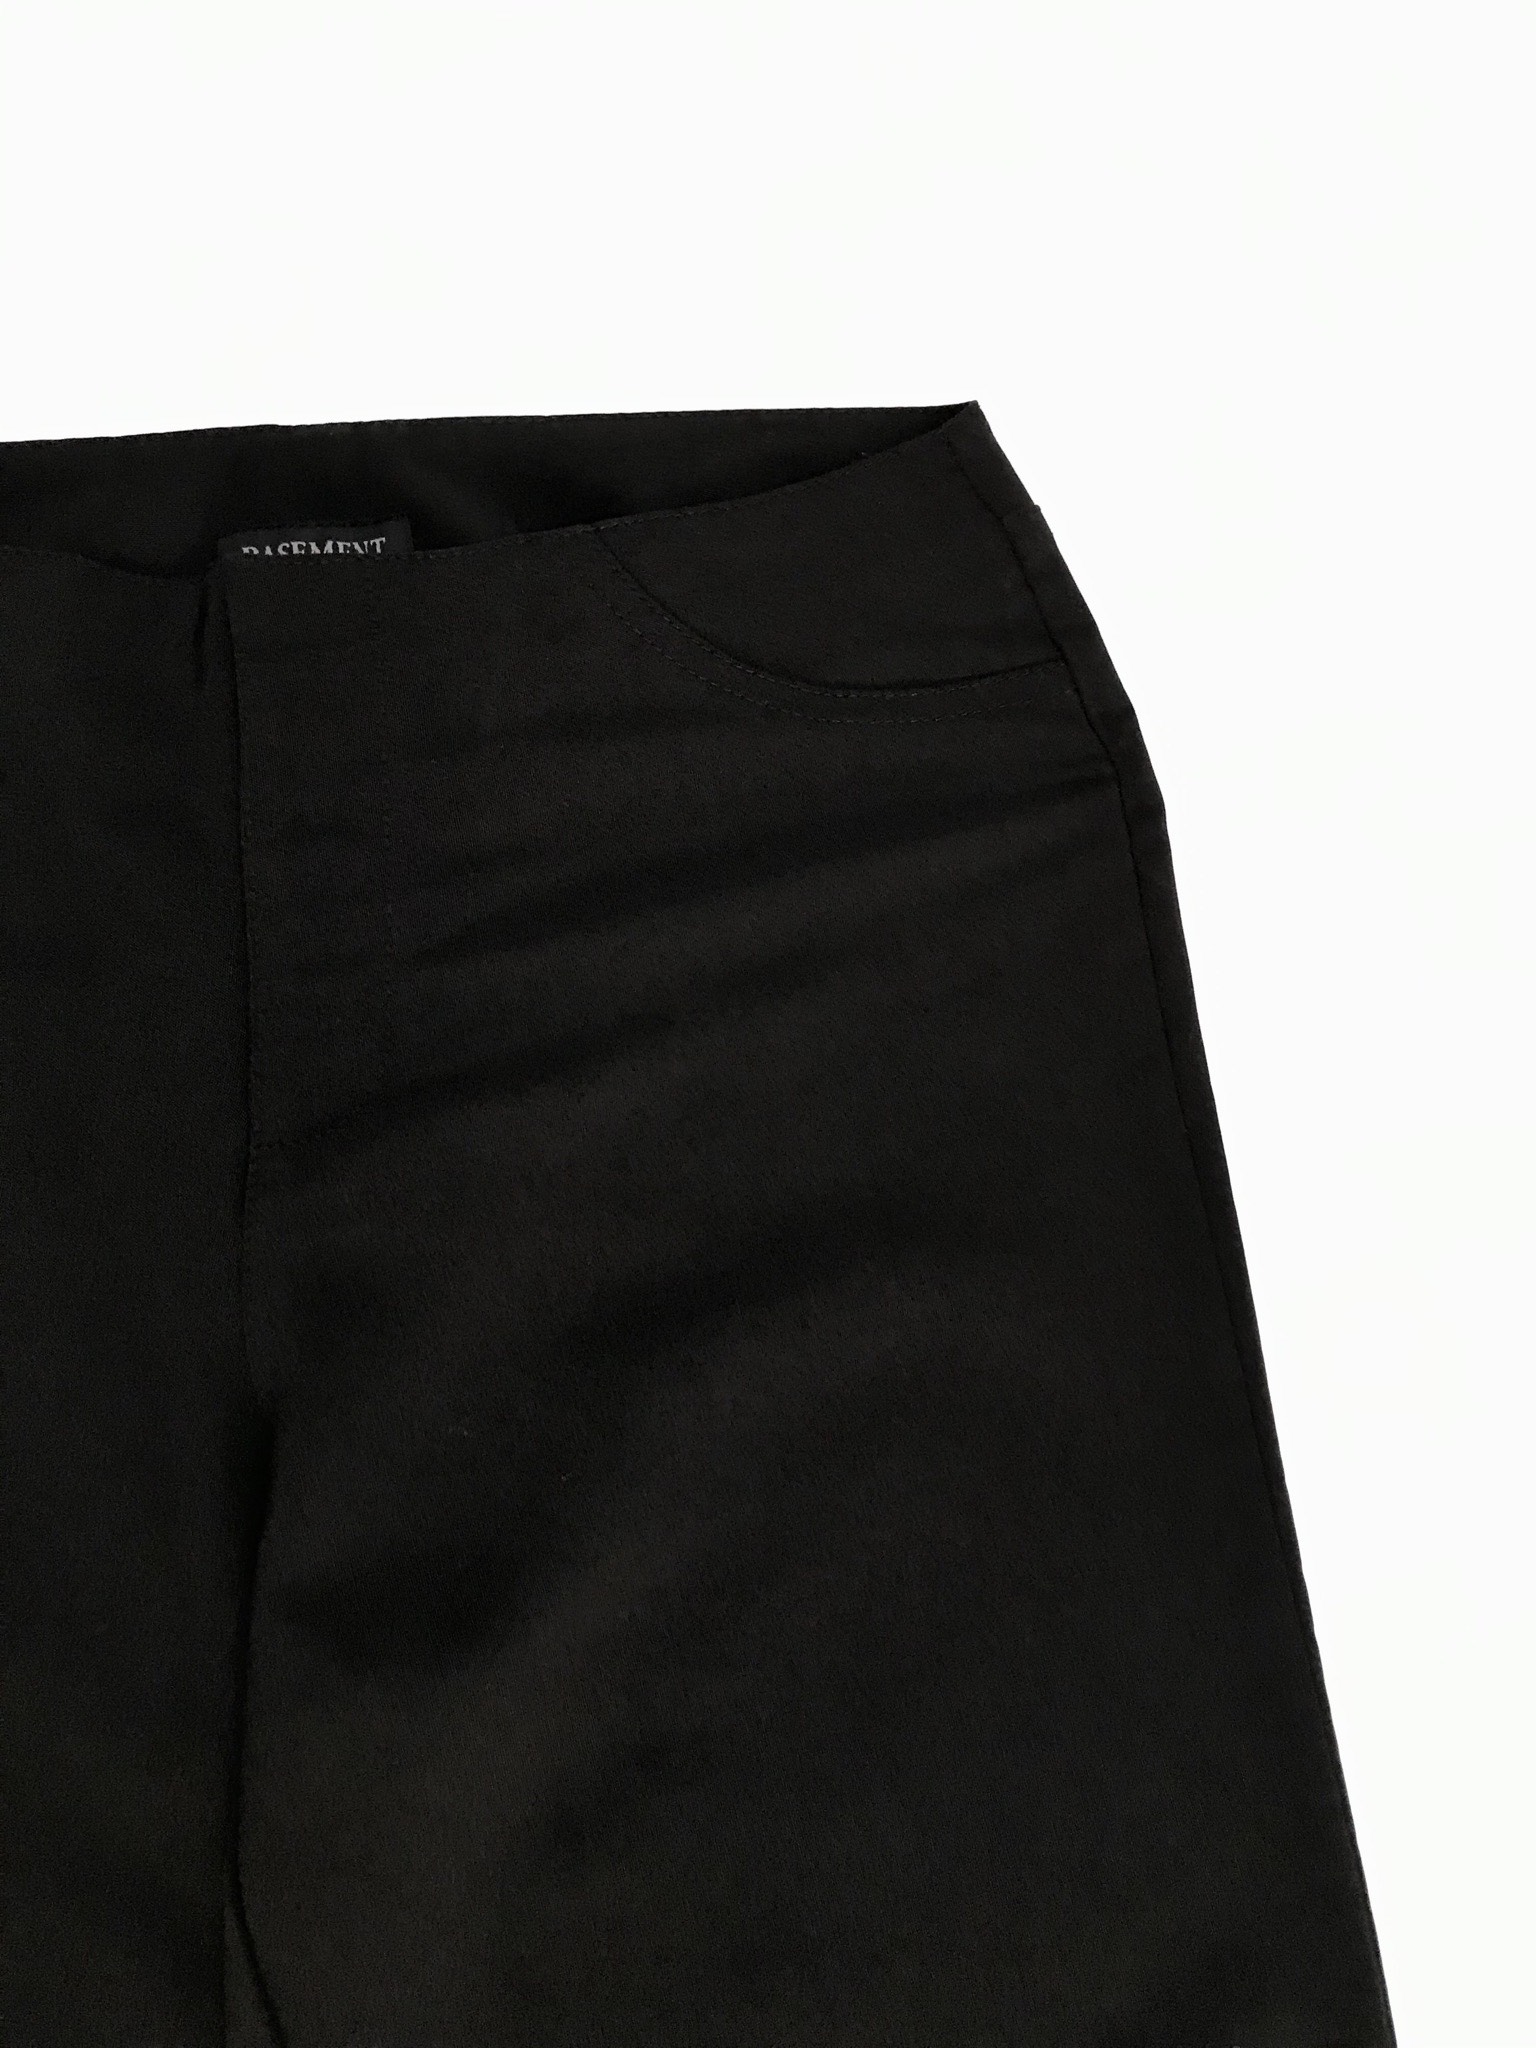 Pantalón Basement negro tipo sastre, sin pretina, con bolsillos posteriores, corte slim
Talla 26